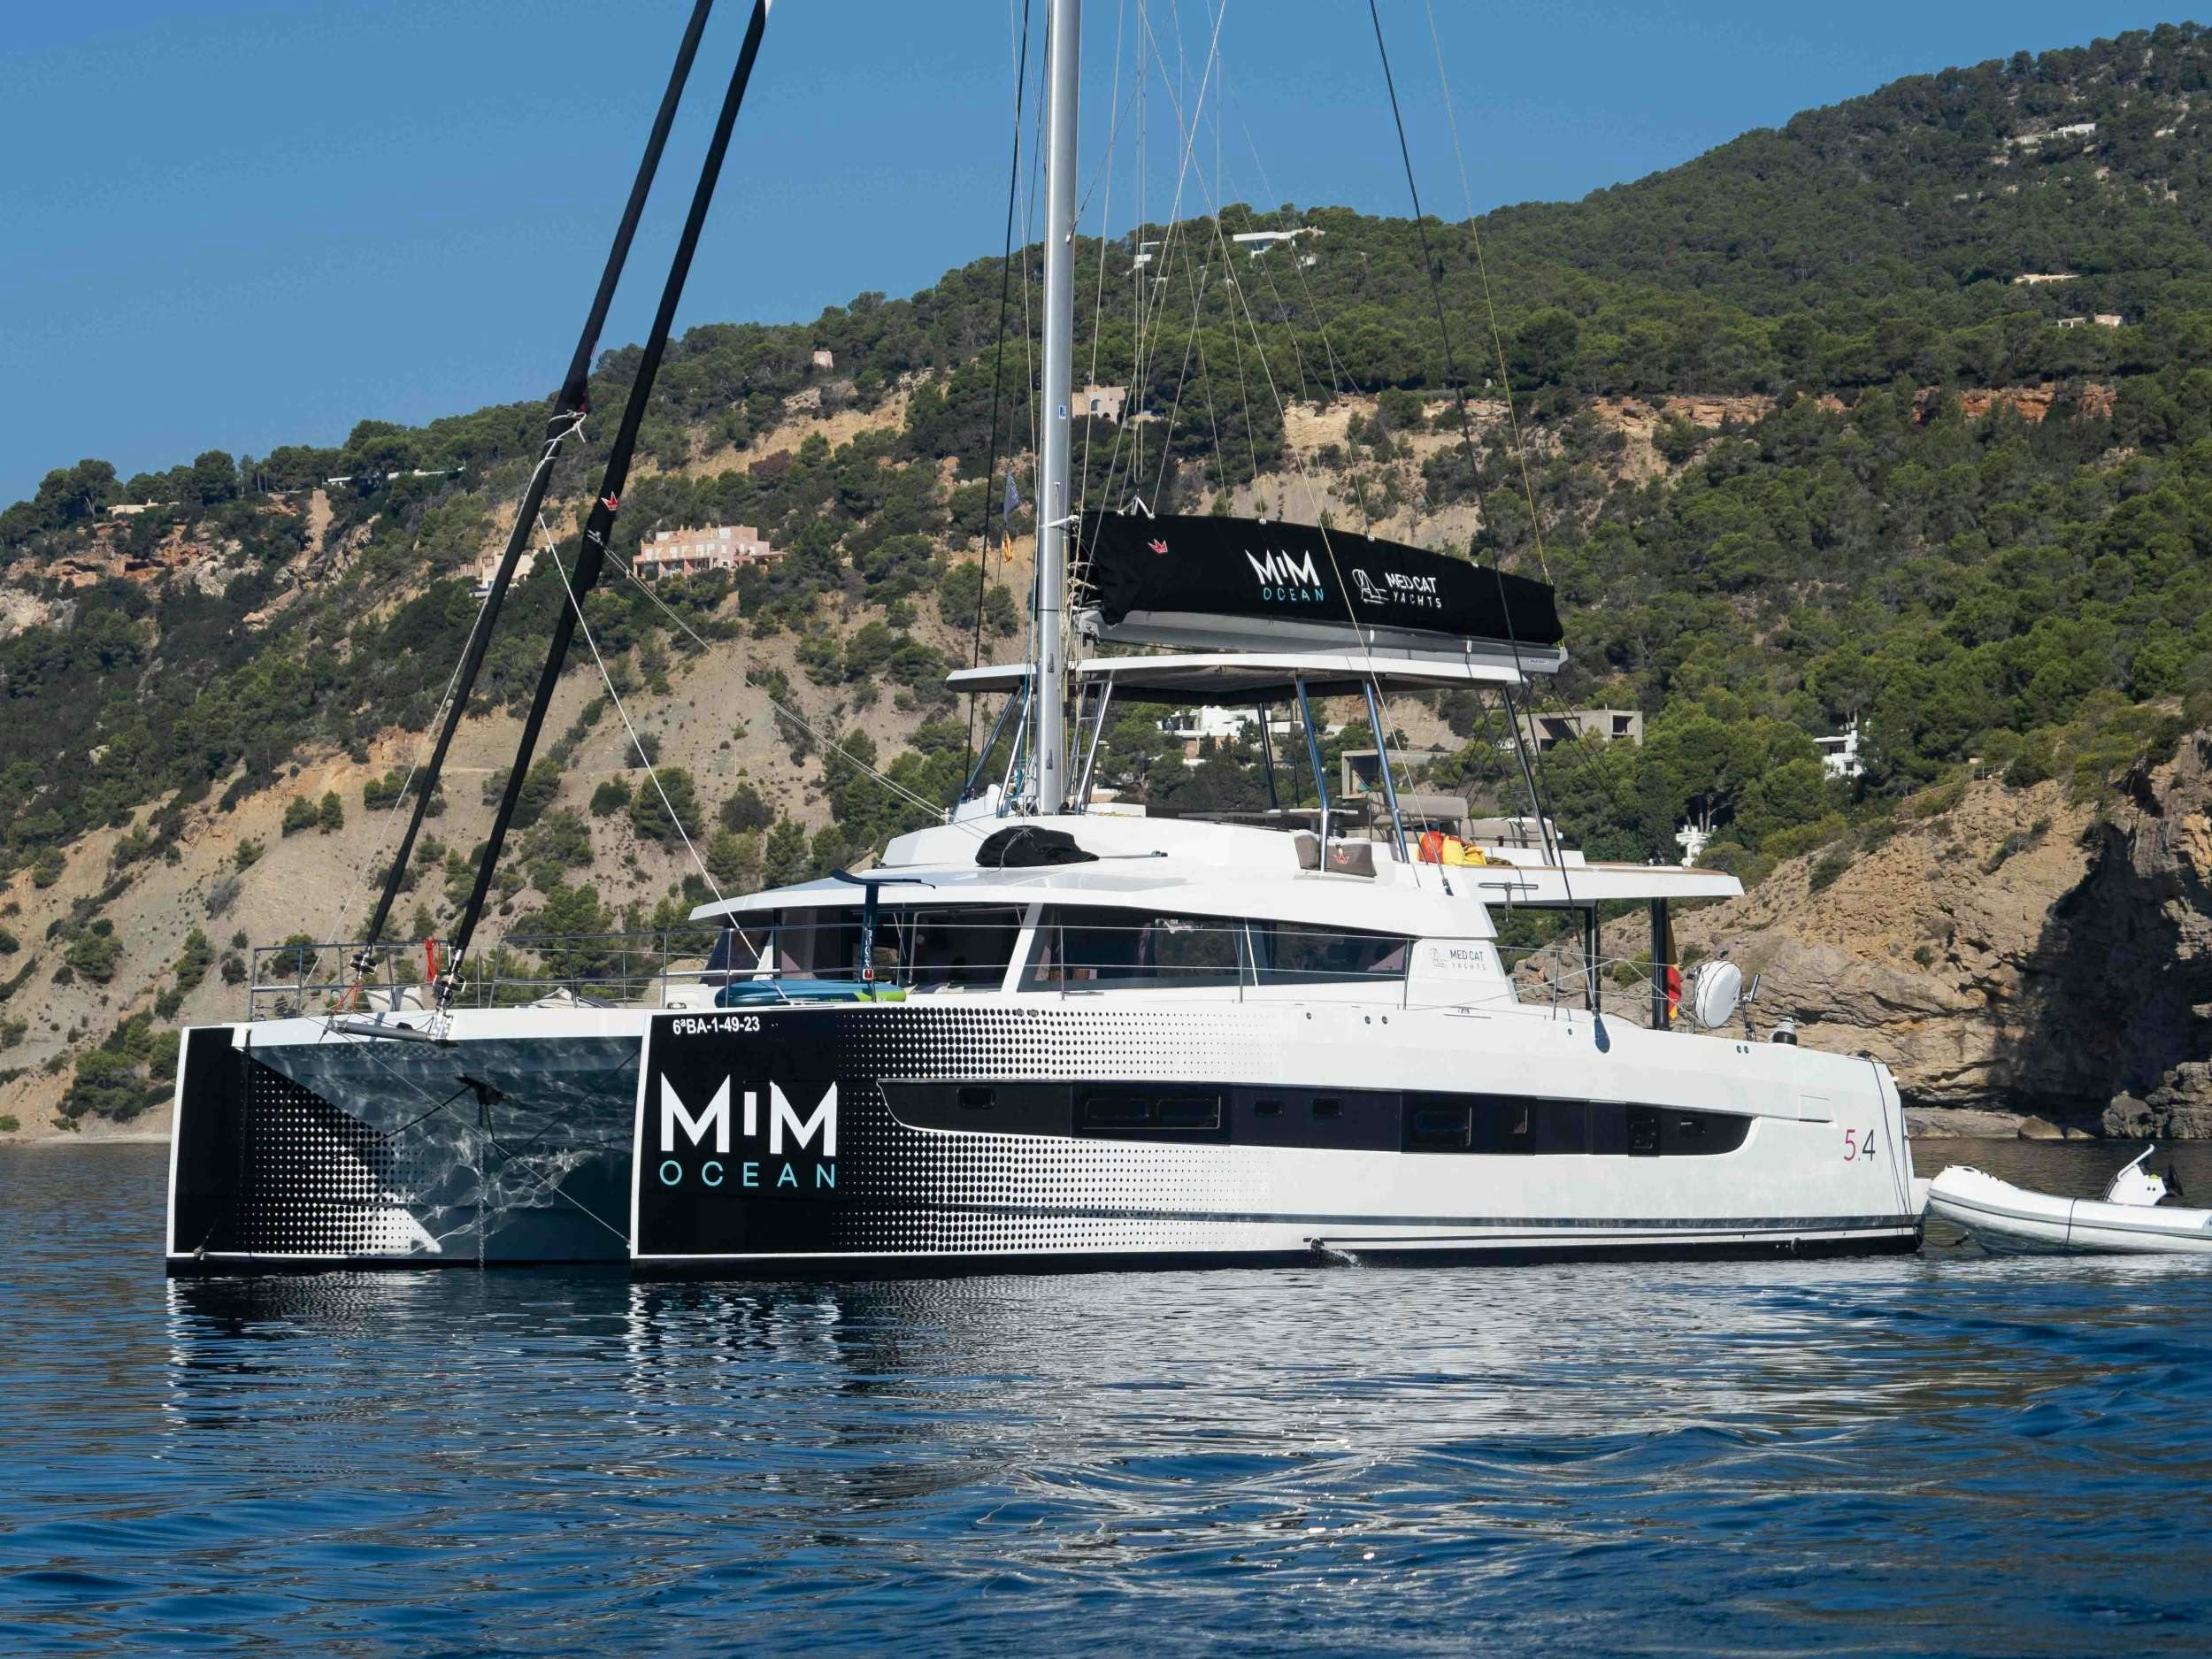 MIM OCEAN THREE - Yacht Charter Radazul & Boat hire in Spain, Balearics, Bahamas 1